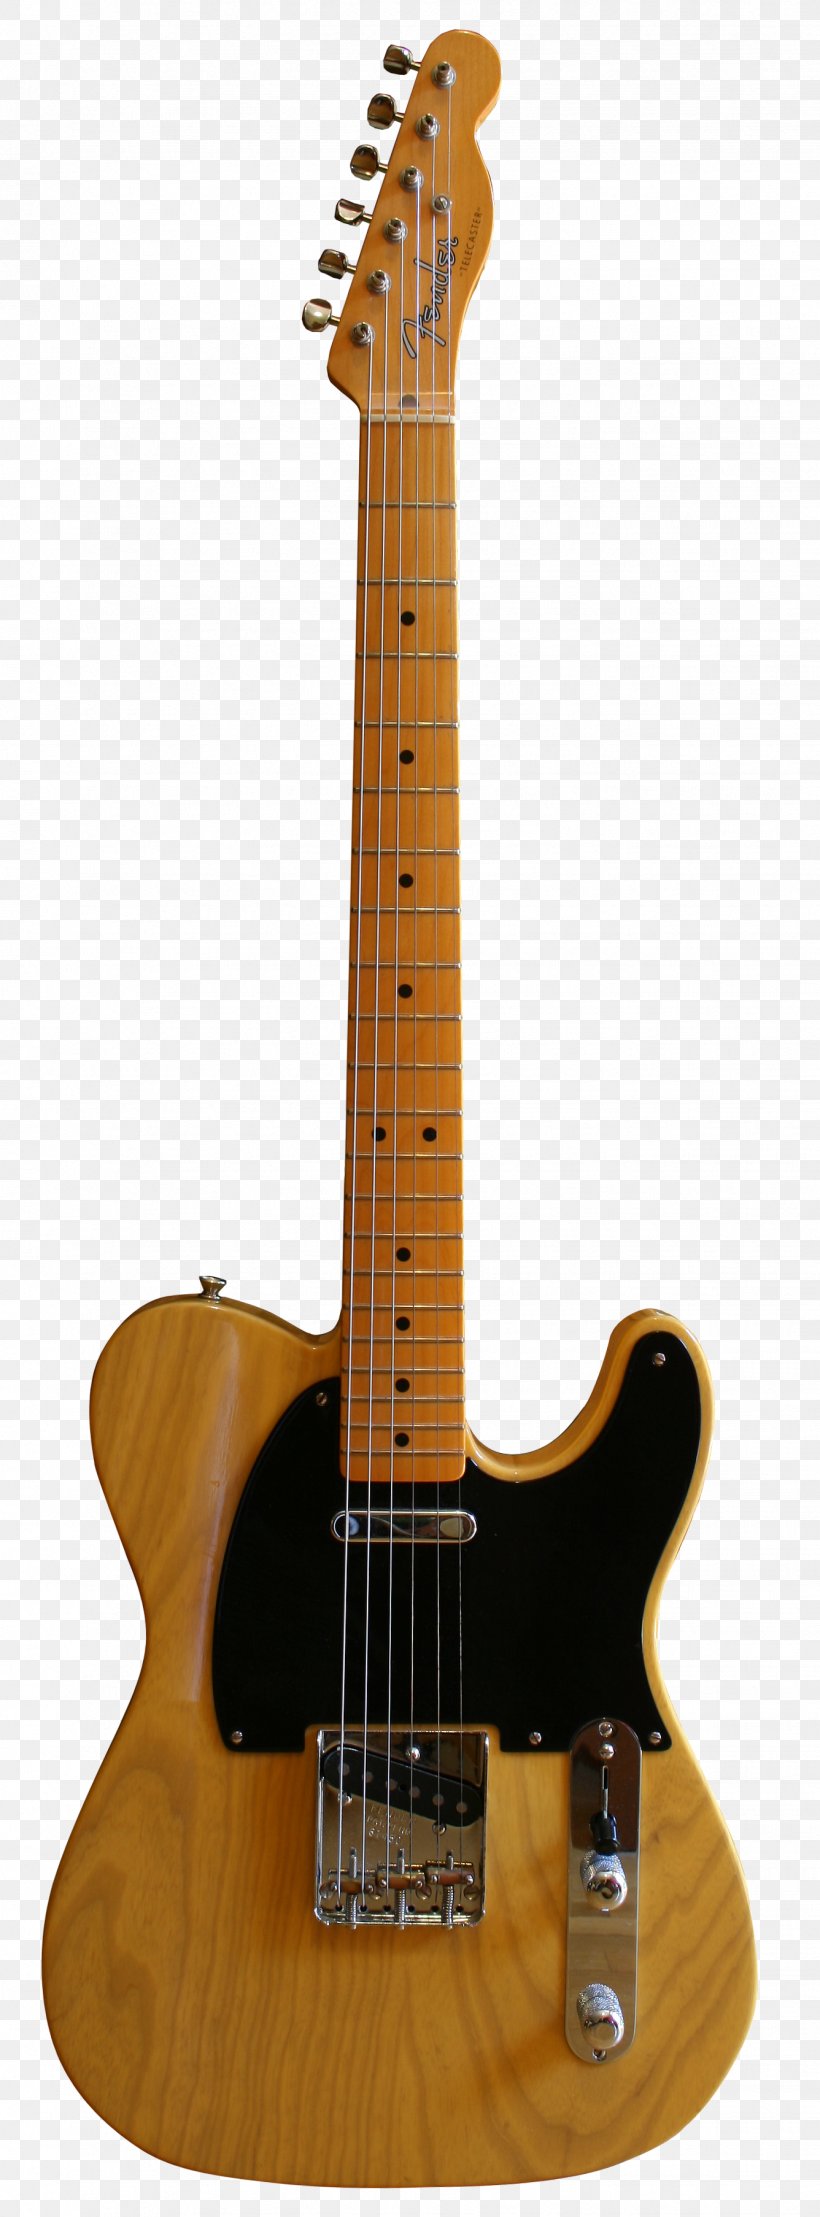 Fender Stratocaster Resonator Guitar Fender Telecaster Electric Guitar Musical Instruments, PNG, 1336x3613px, Fender Stratocaster, Acoustic Electric Guitar, Acoustic Guitar, Bass Guitar, Dean Guitars Download Free